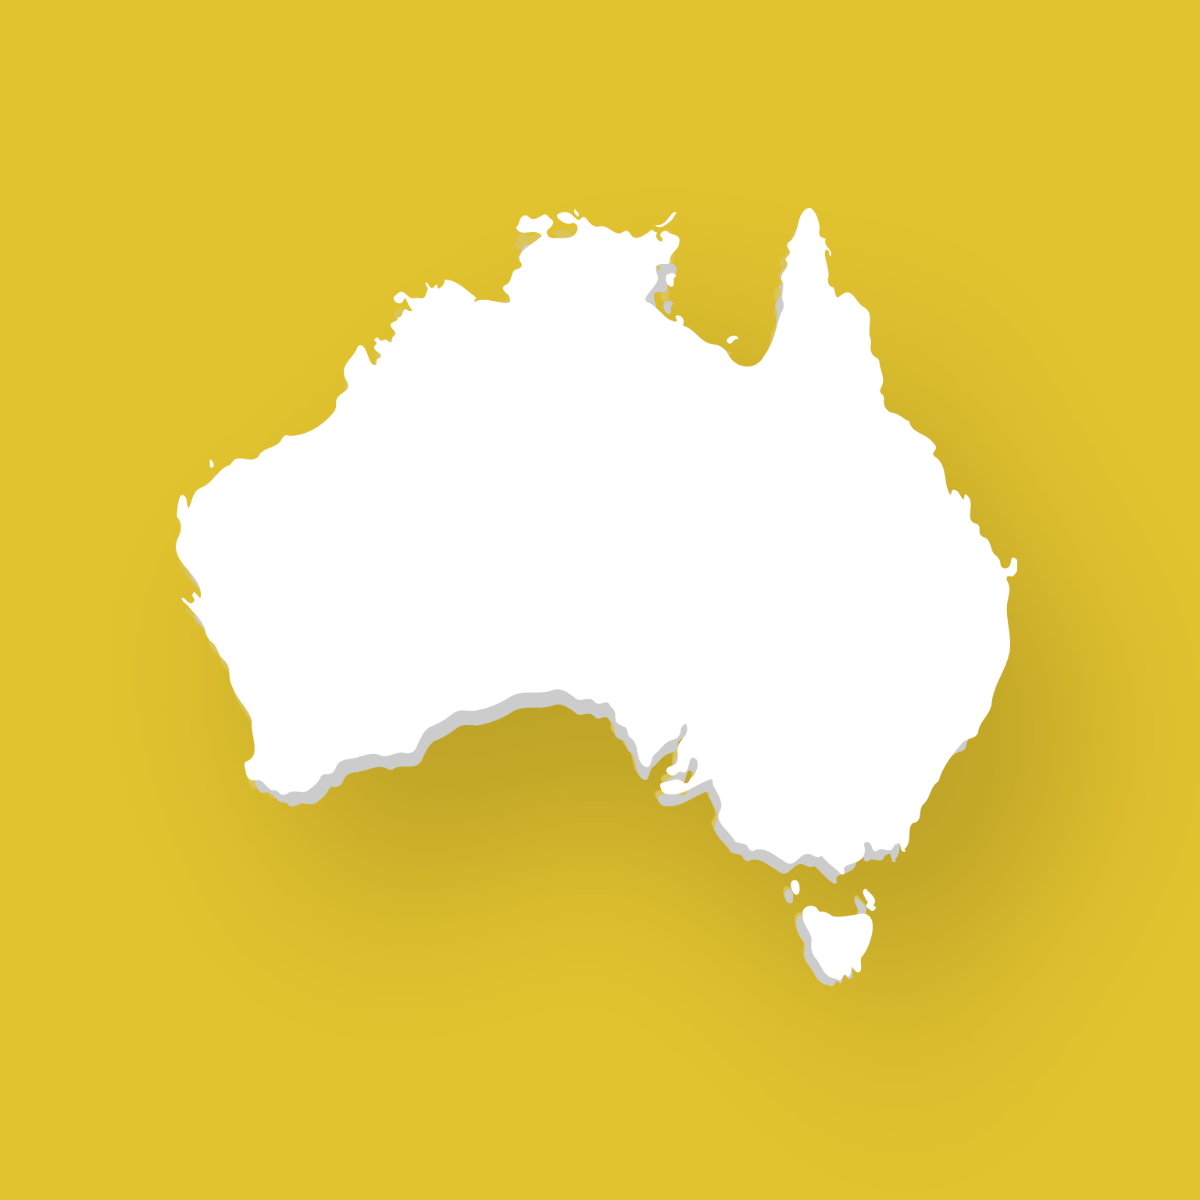 Free 3D Australia Map Vector Template